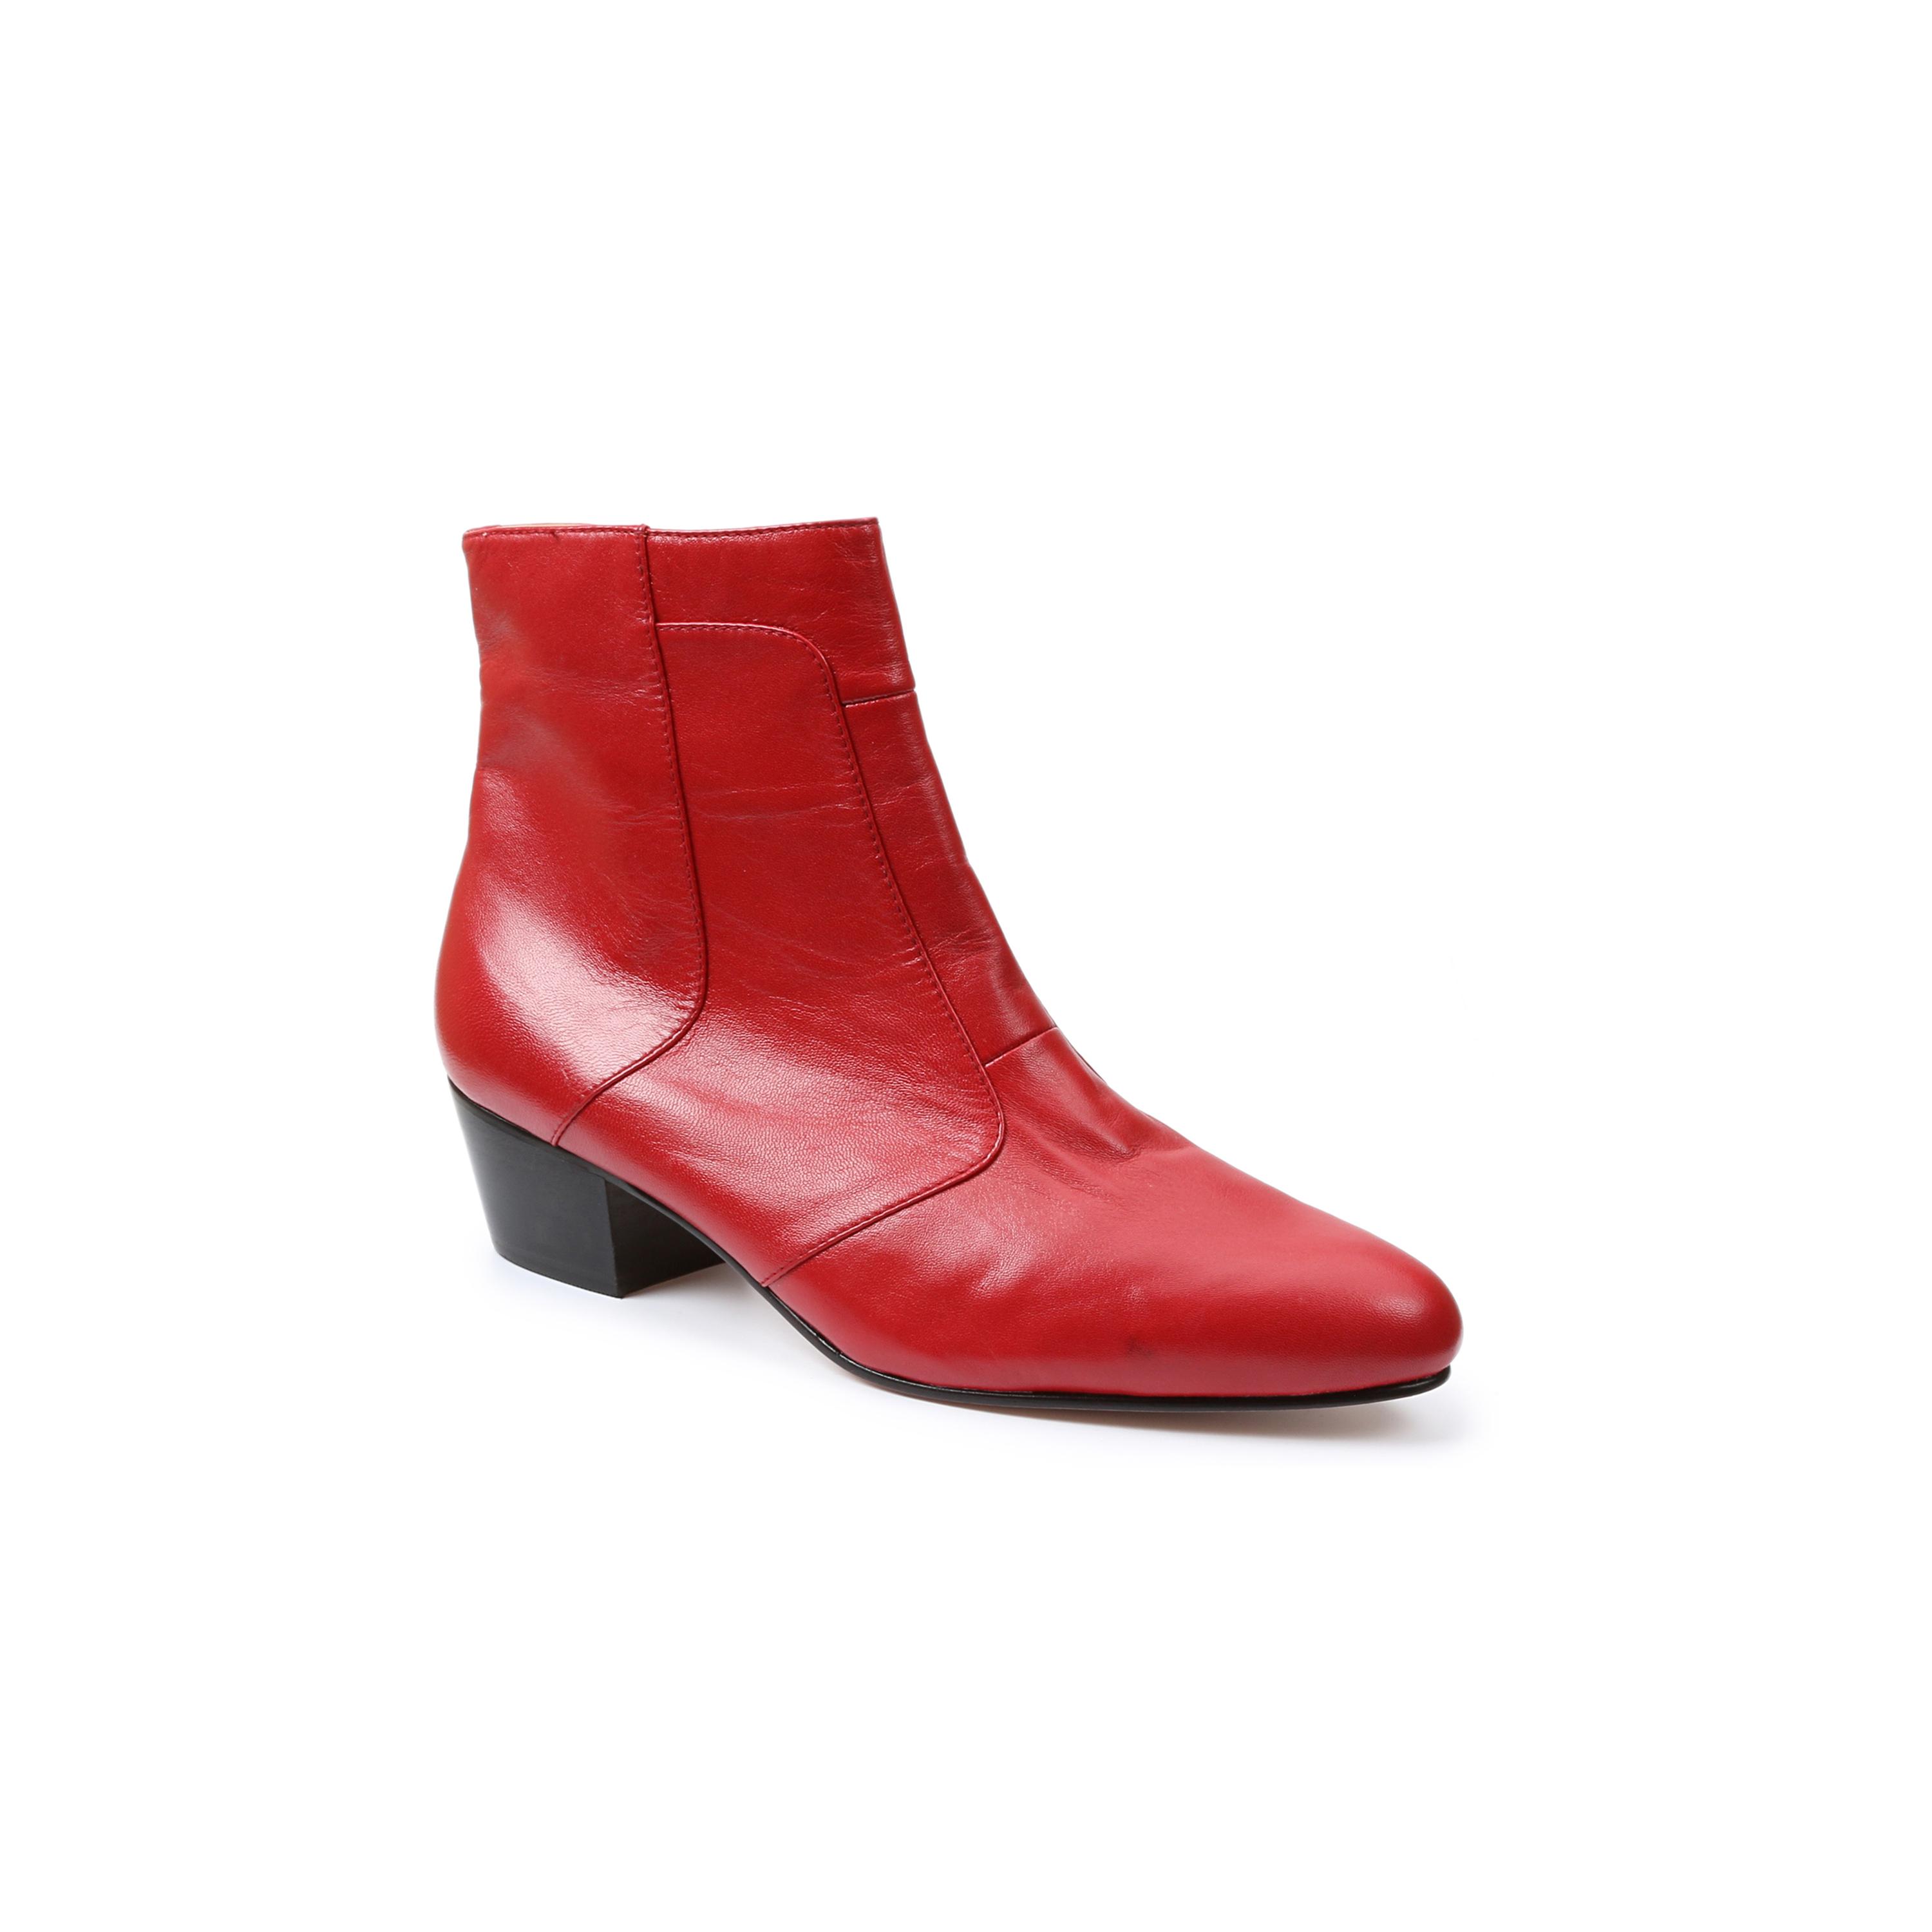 Giorgio Brutini Calloway Red Leather Boots | Upscale Menswear